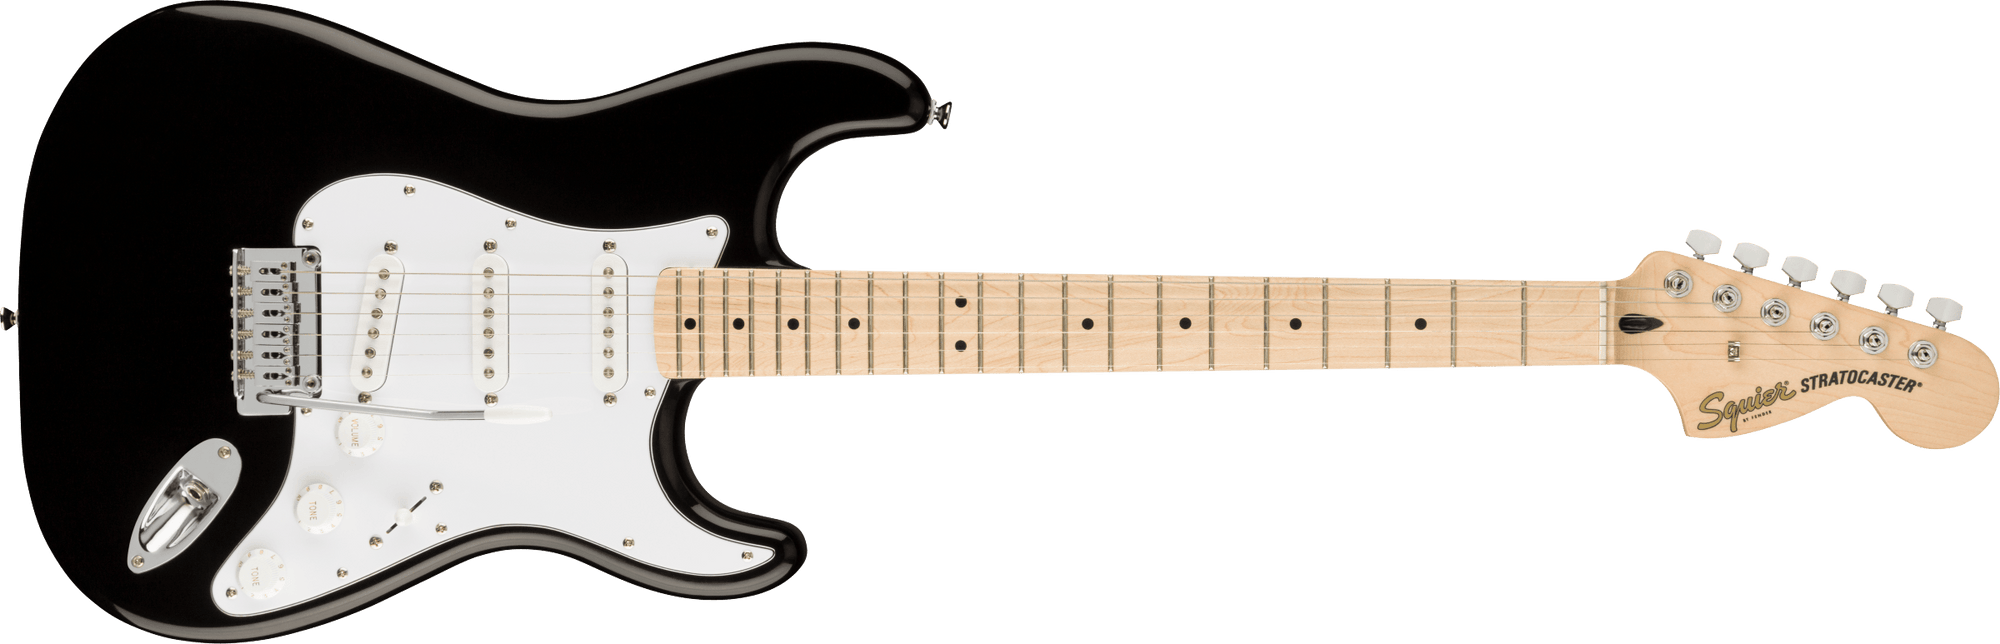 Affinity Series Stratocaster, Black, Maple FB, White Pickguard